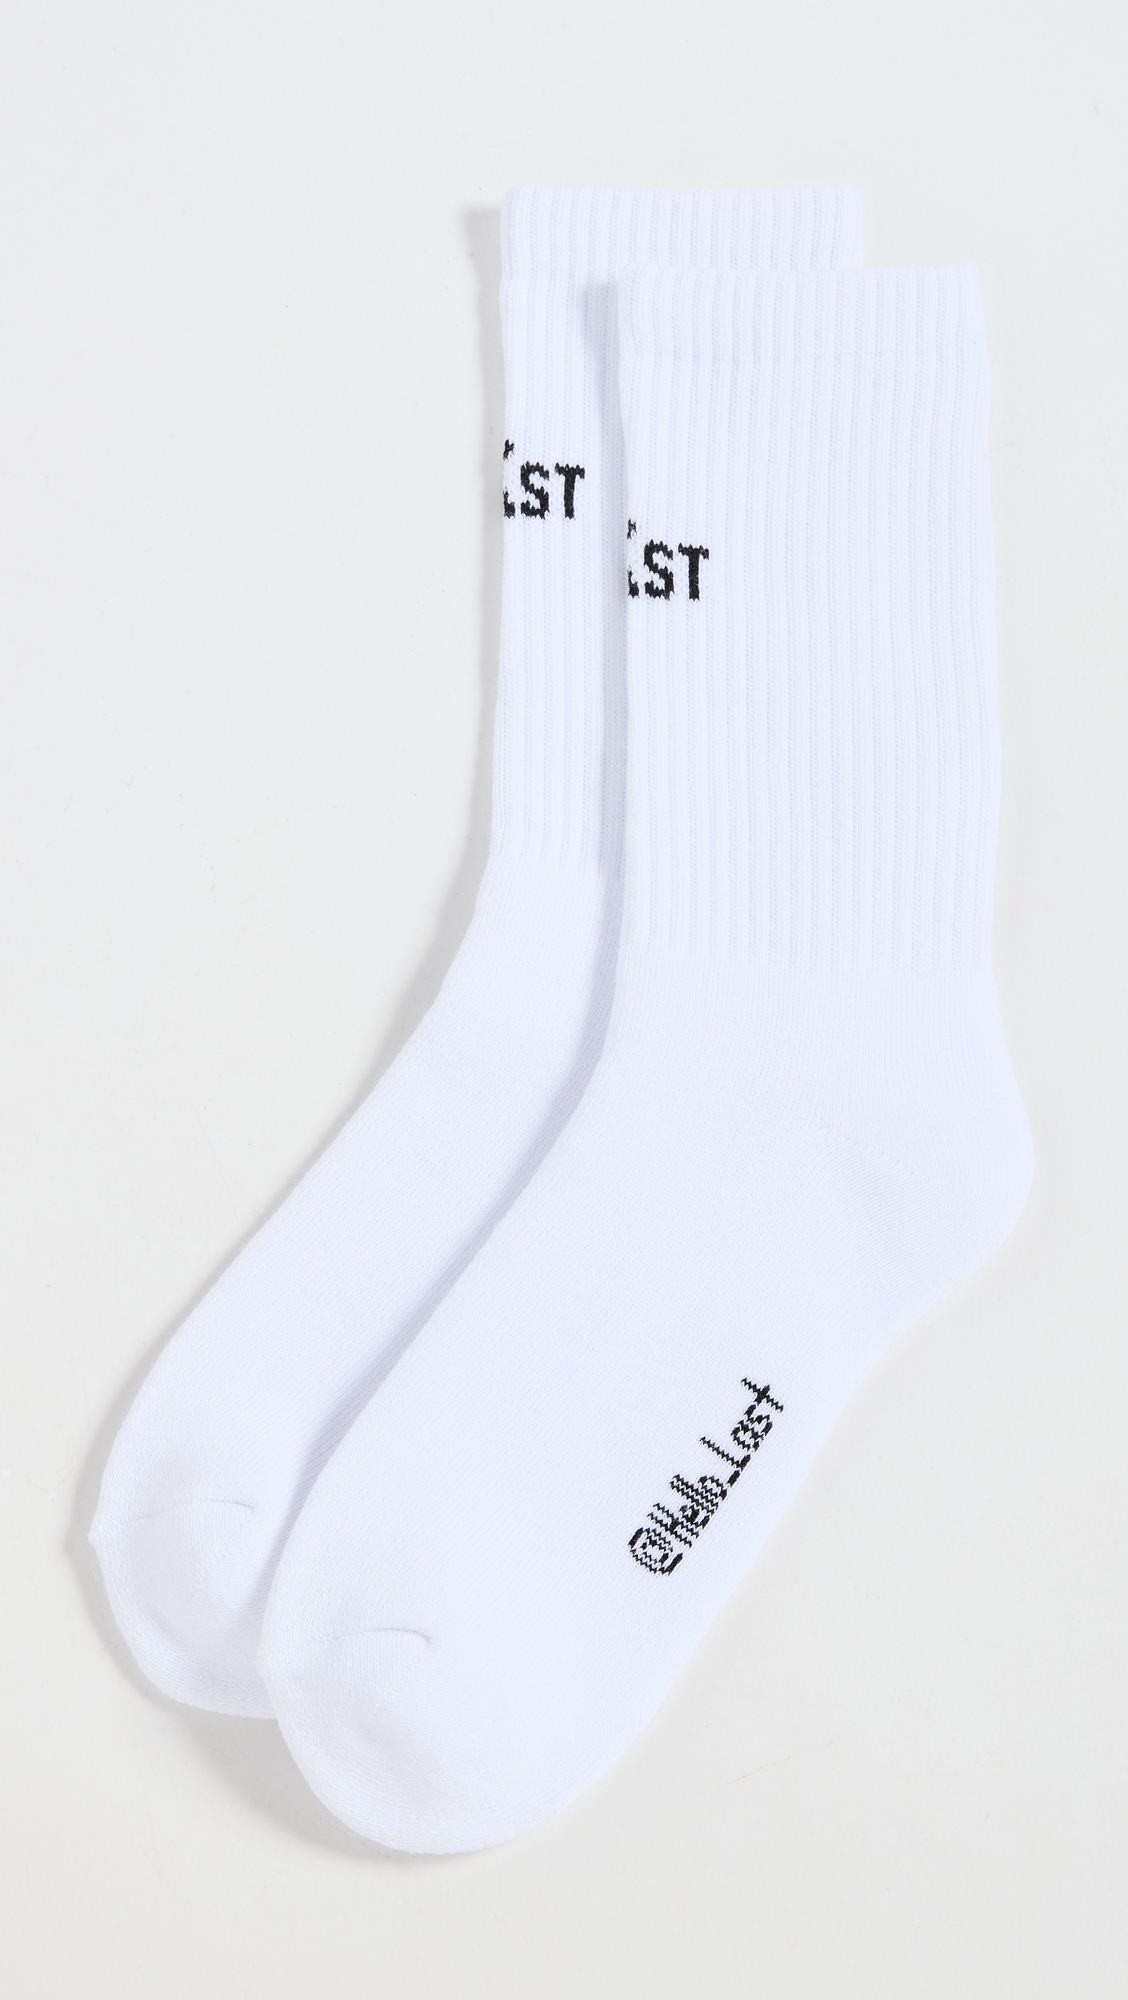 LAST LAEST White Socks